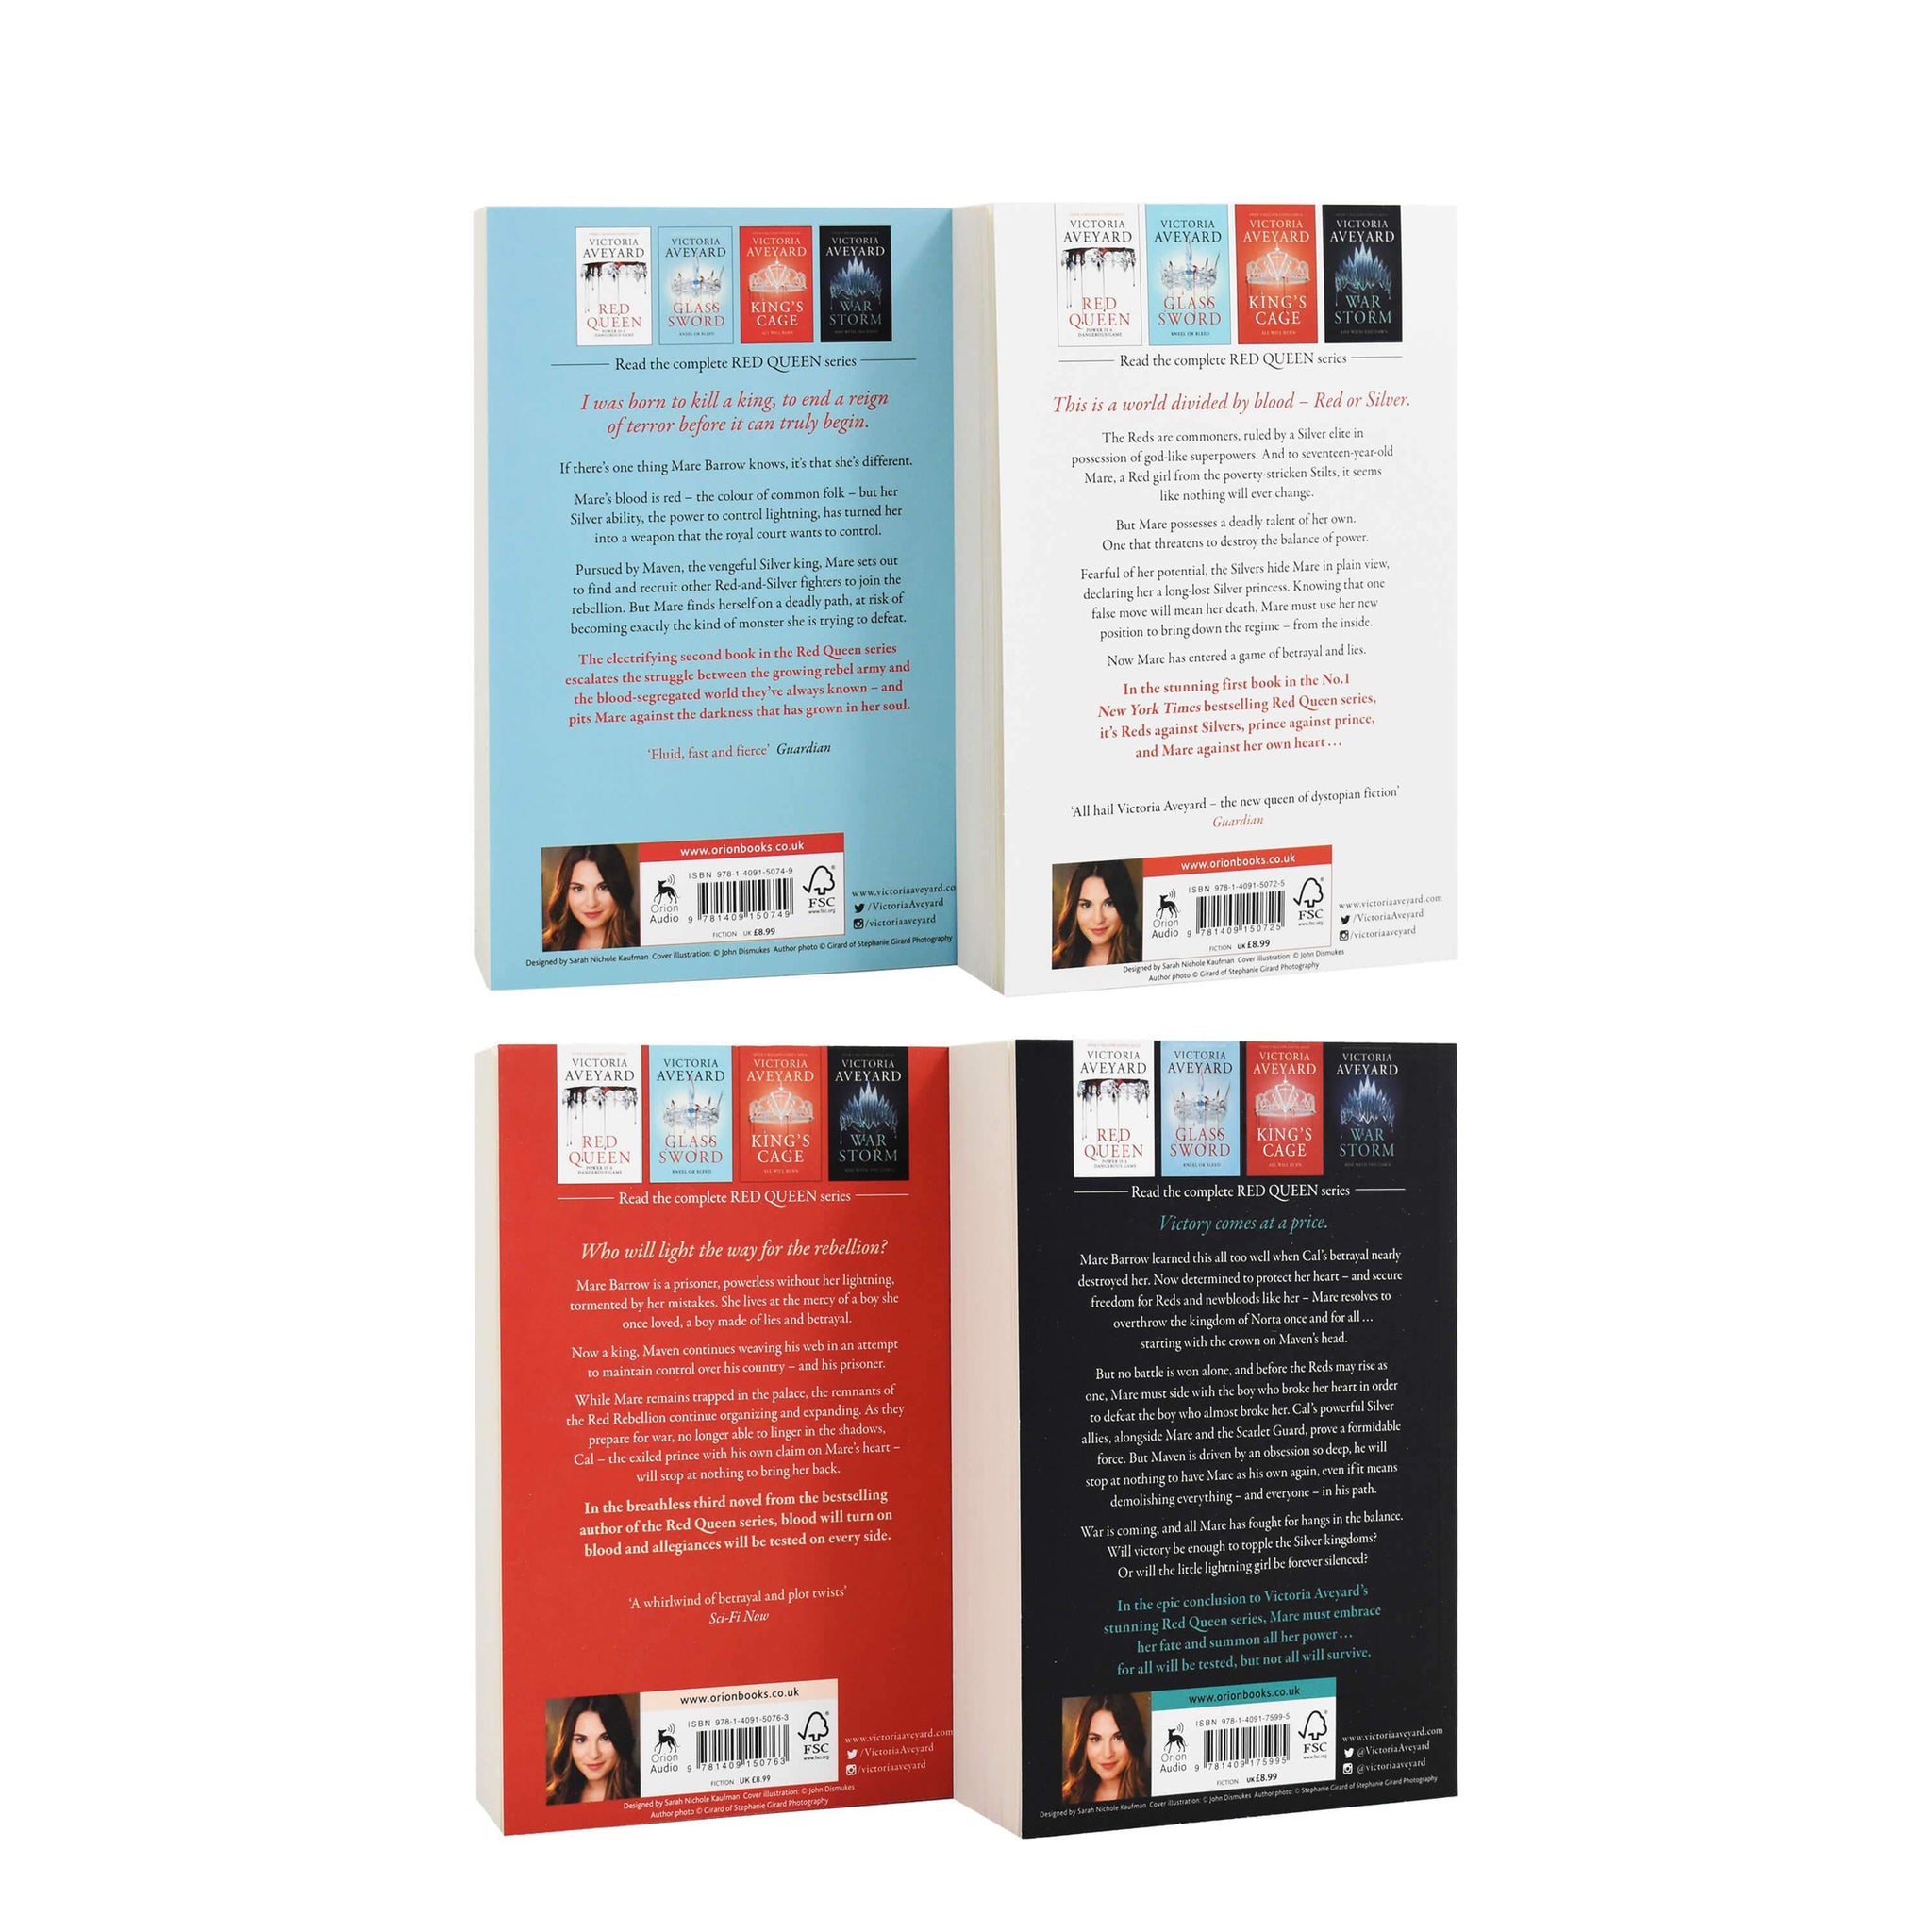 Fradrage farvning Lære udenad Victoria Aveyard Red Queen 4 Books by Victoria Aveyard - Paperback | St  Stephens Books